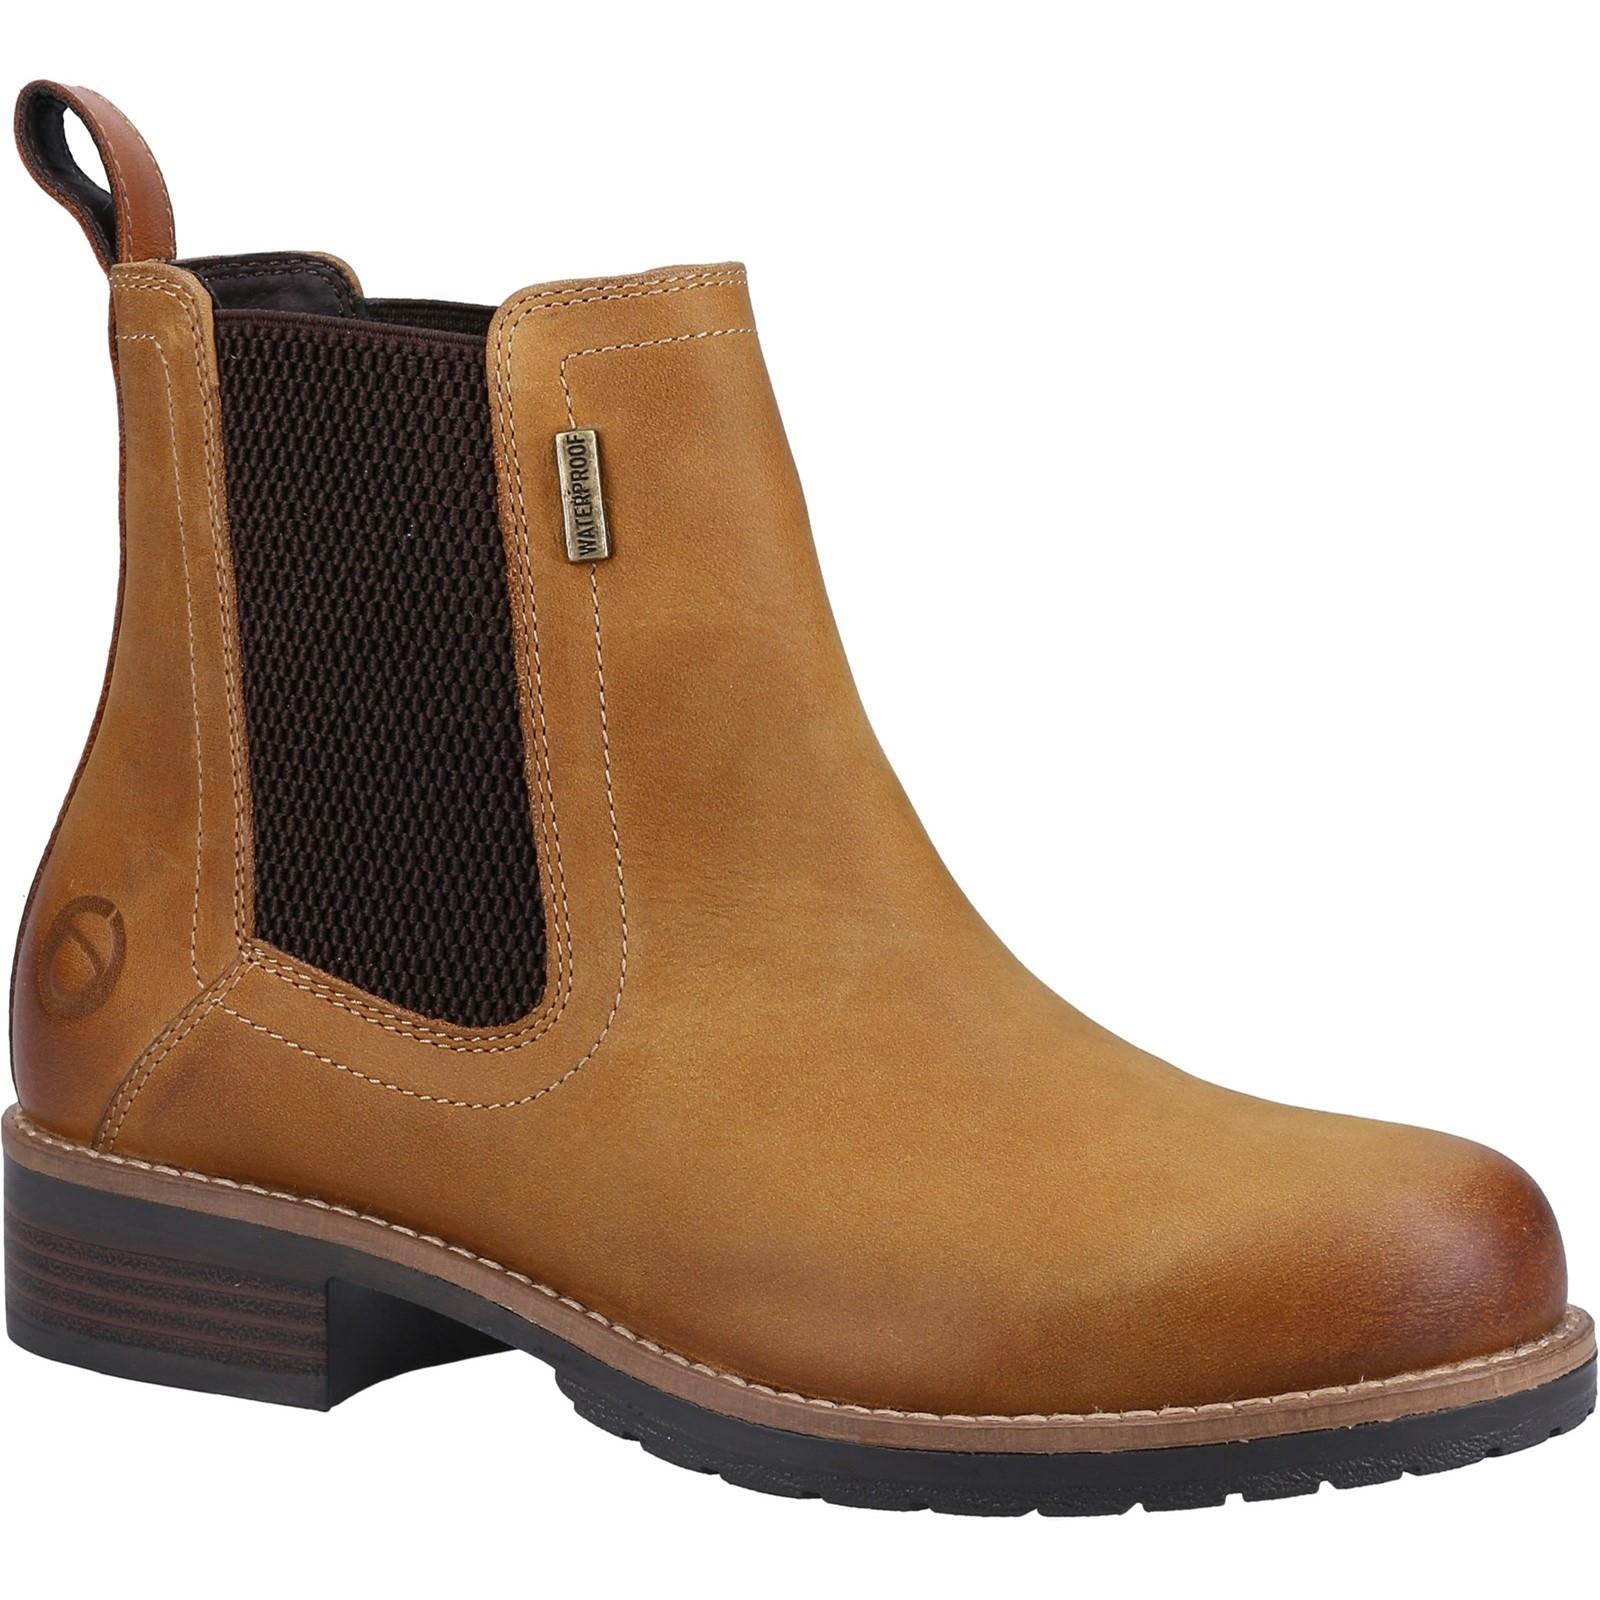 Cotswold Enstone ladies camel tan leather waterproof Chelsea dealer boots